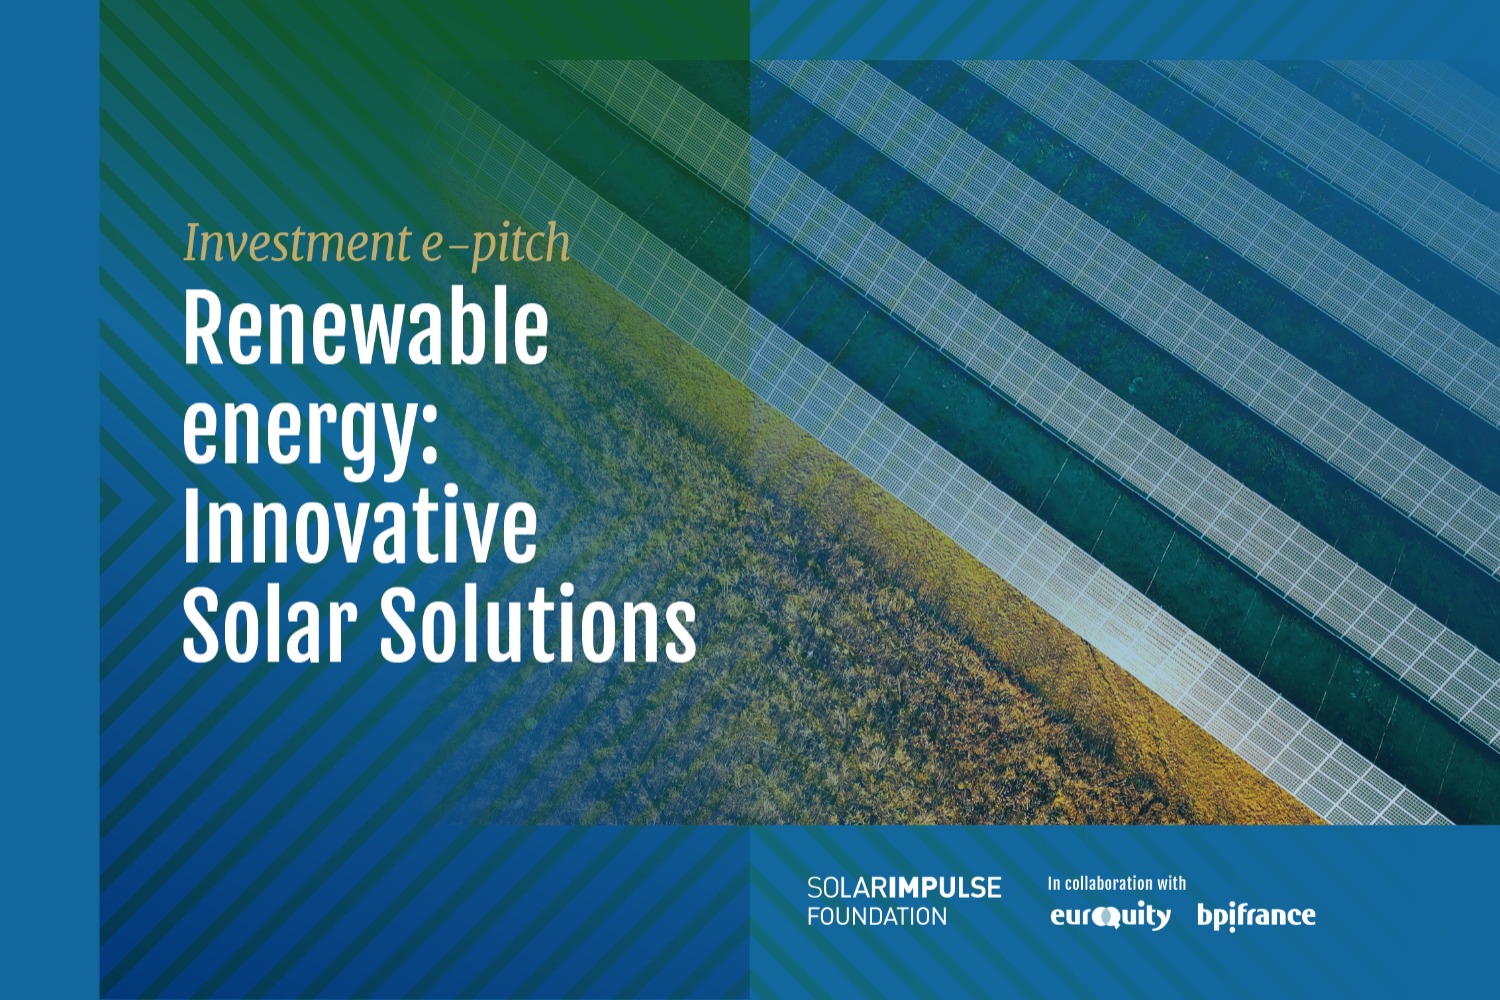 E-Pitch Solar Impulse Investment - "Renewable Energy: Innovative Solar Solutions" 